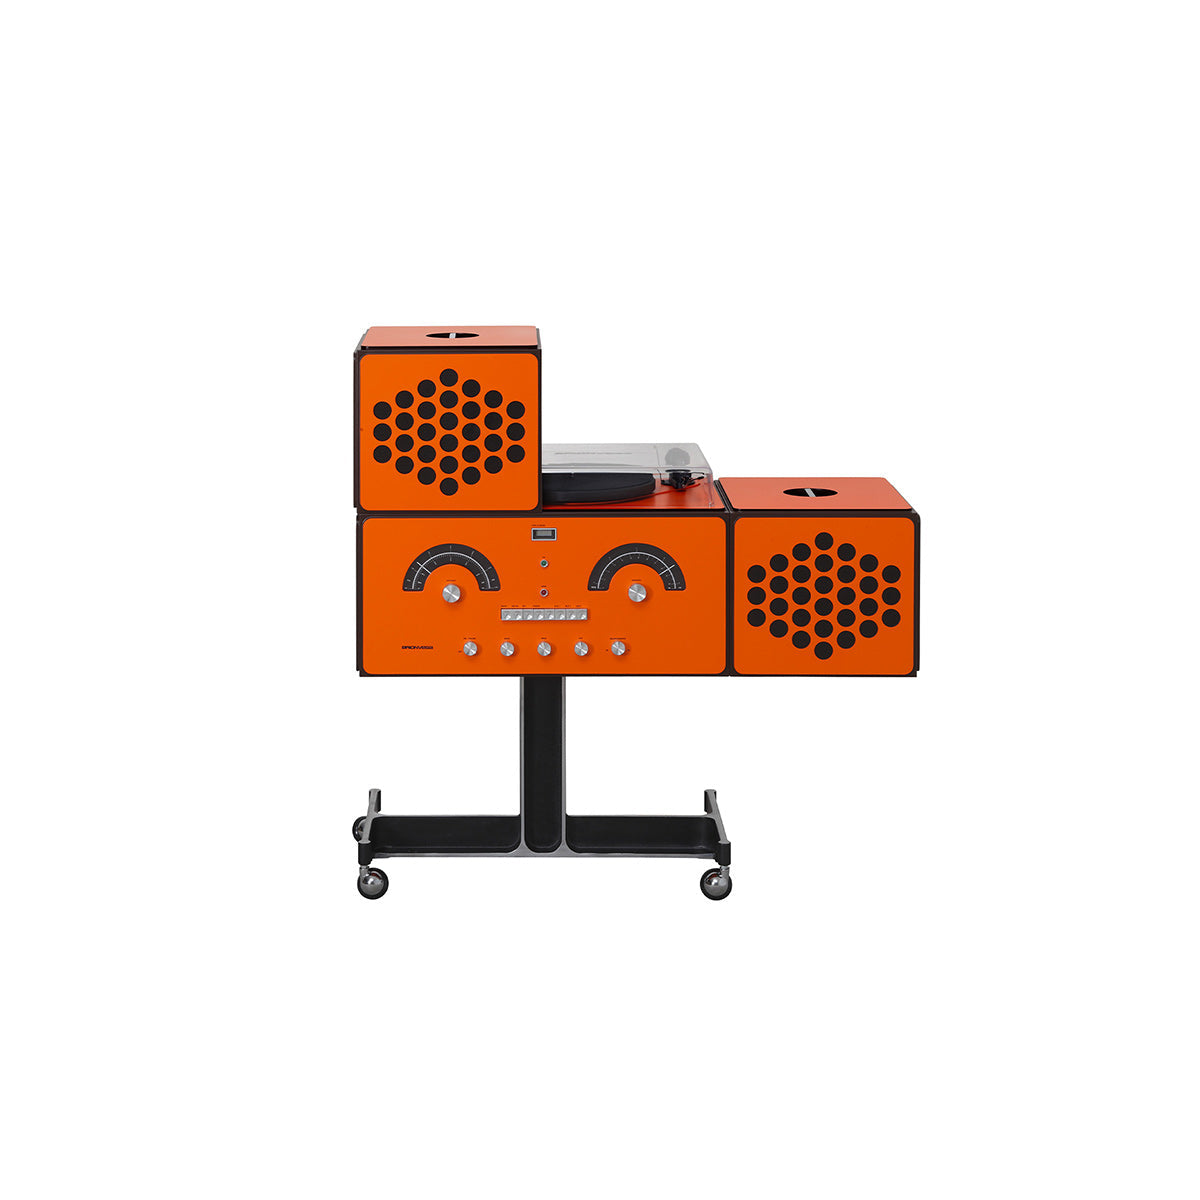 Radiofonografo rr226 fo-st - Orange